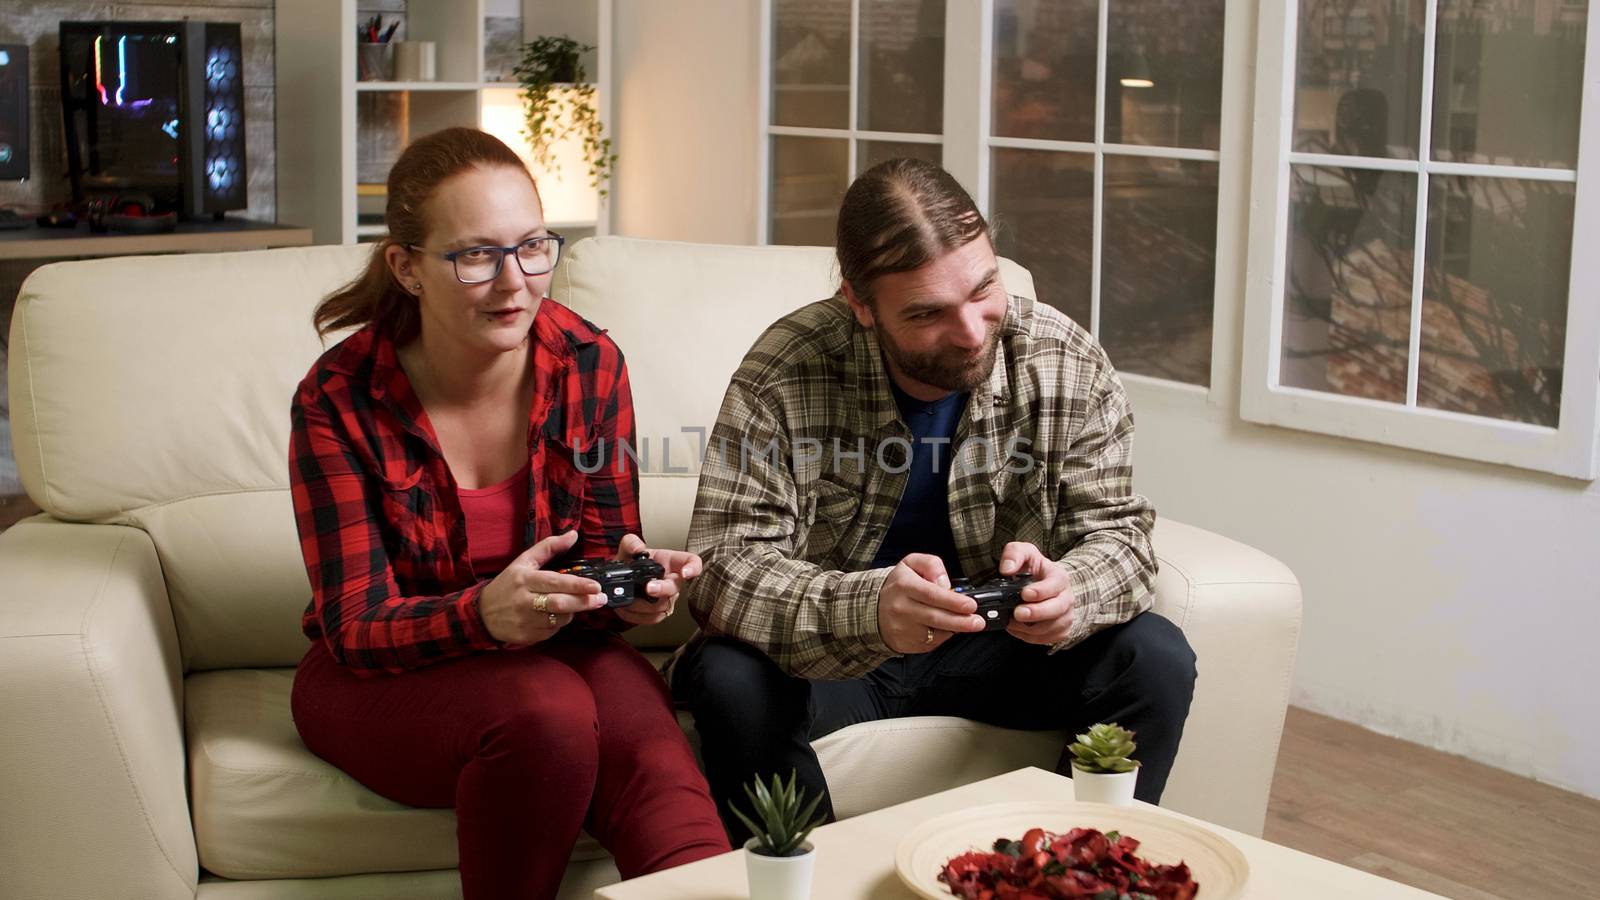 Man and woman sitting on sofa playing video games using wireless joysticks.